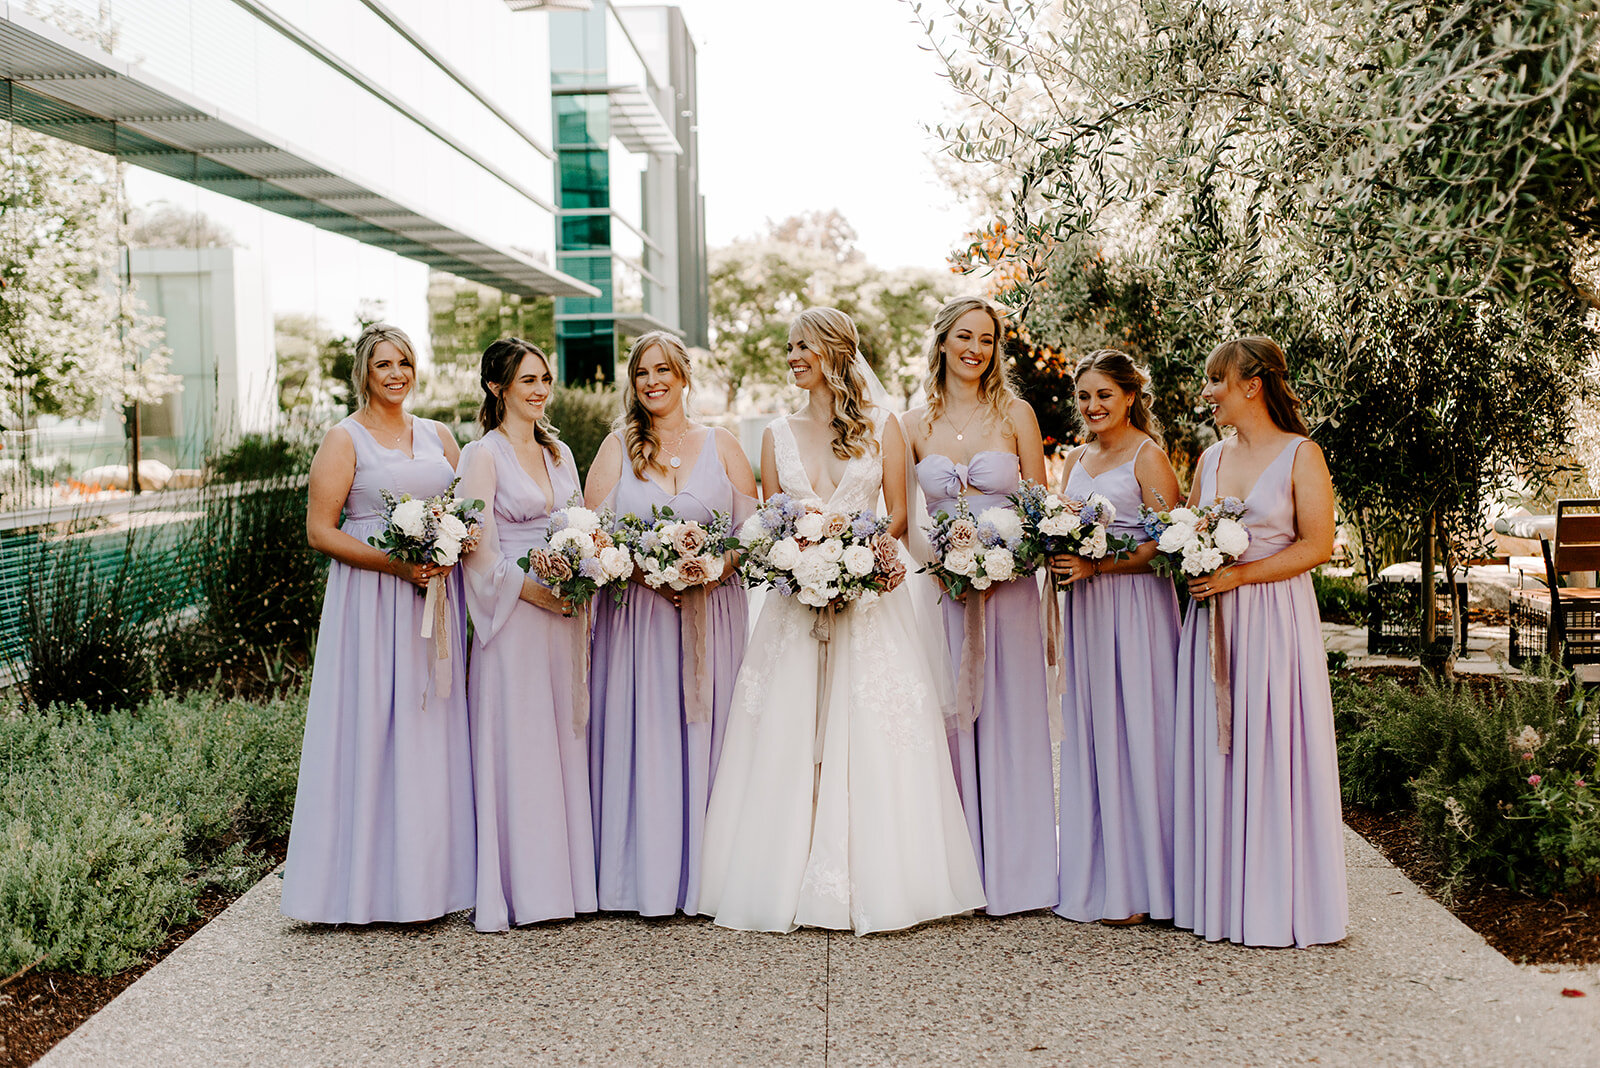 2 lavender bridesmaid bouquets.jpg